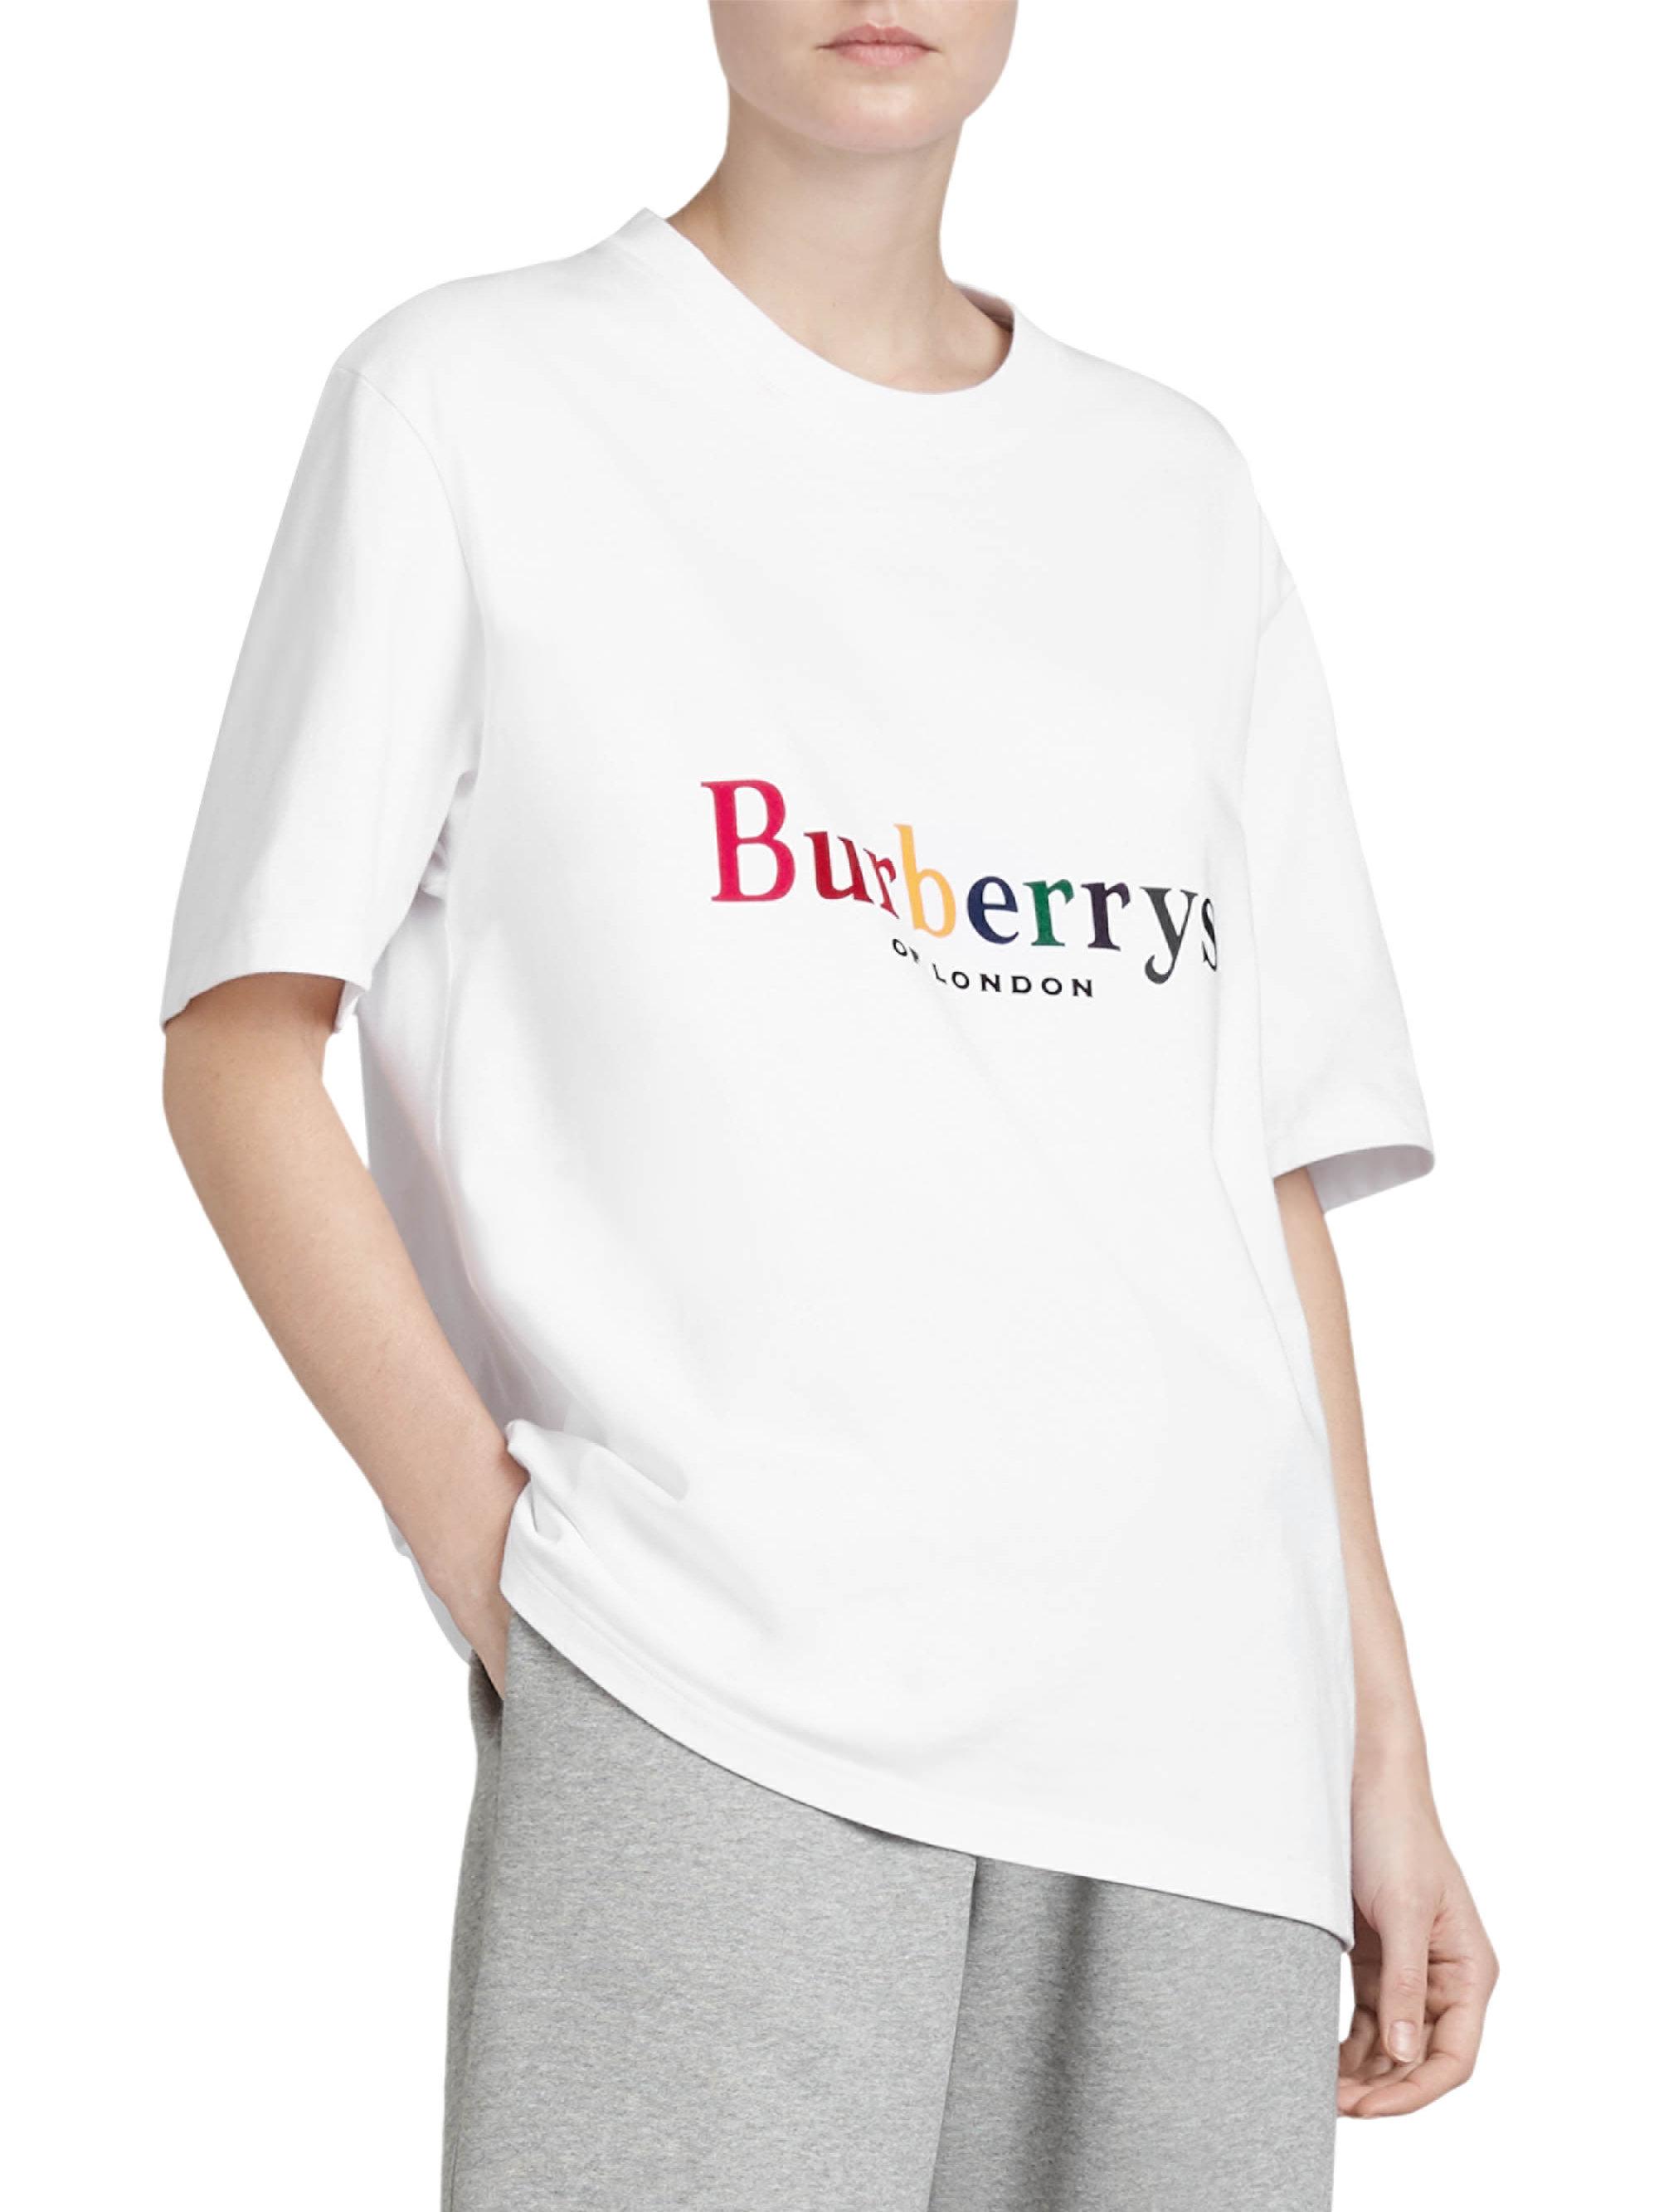 Burberry Rainbow Logo Tee in White - Lyst